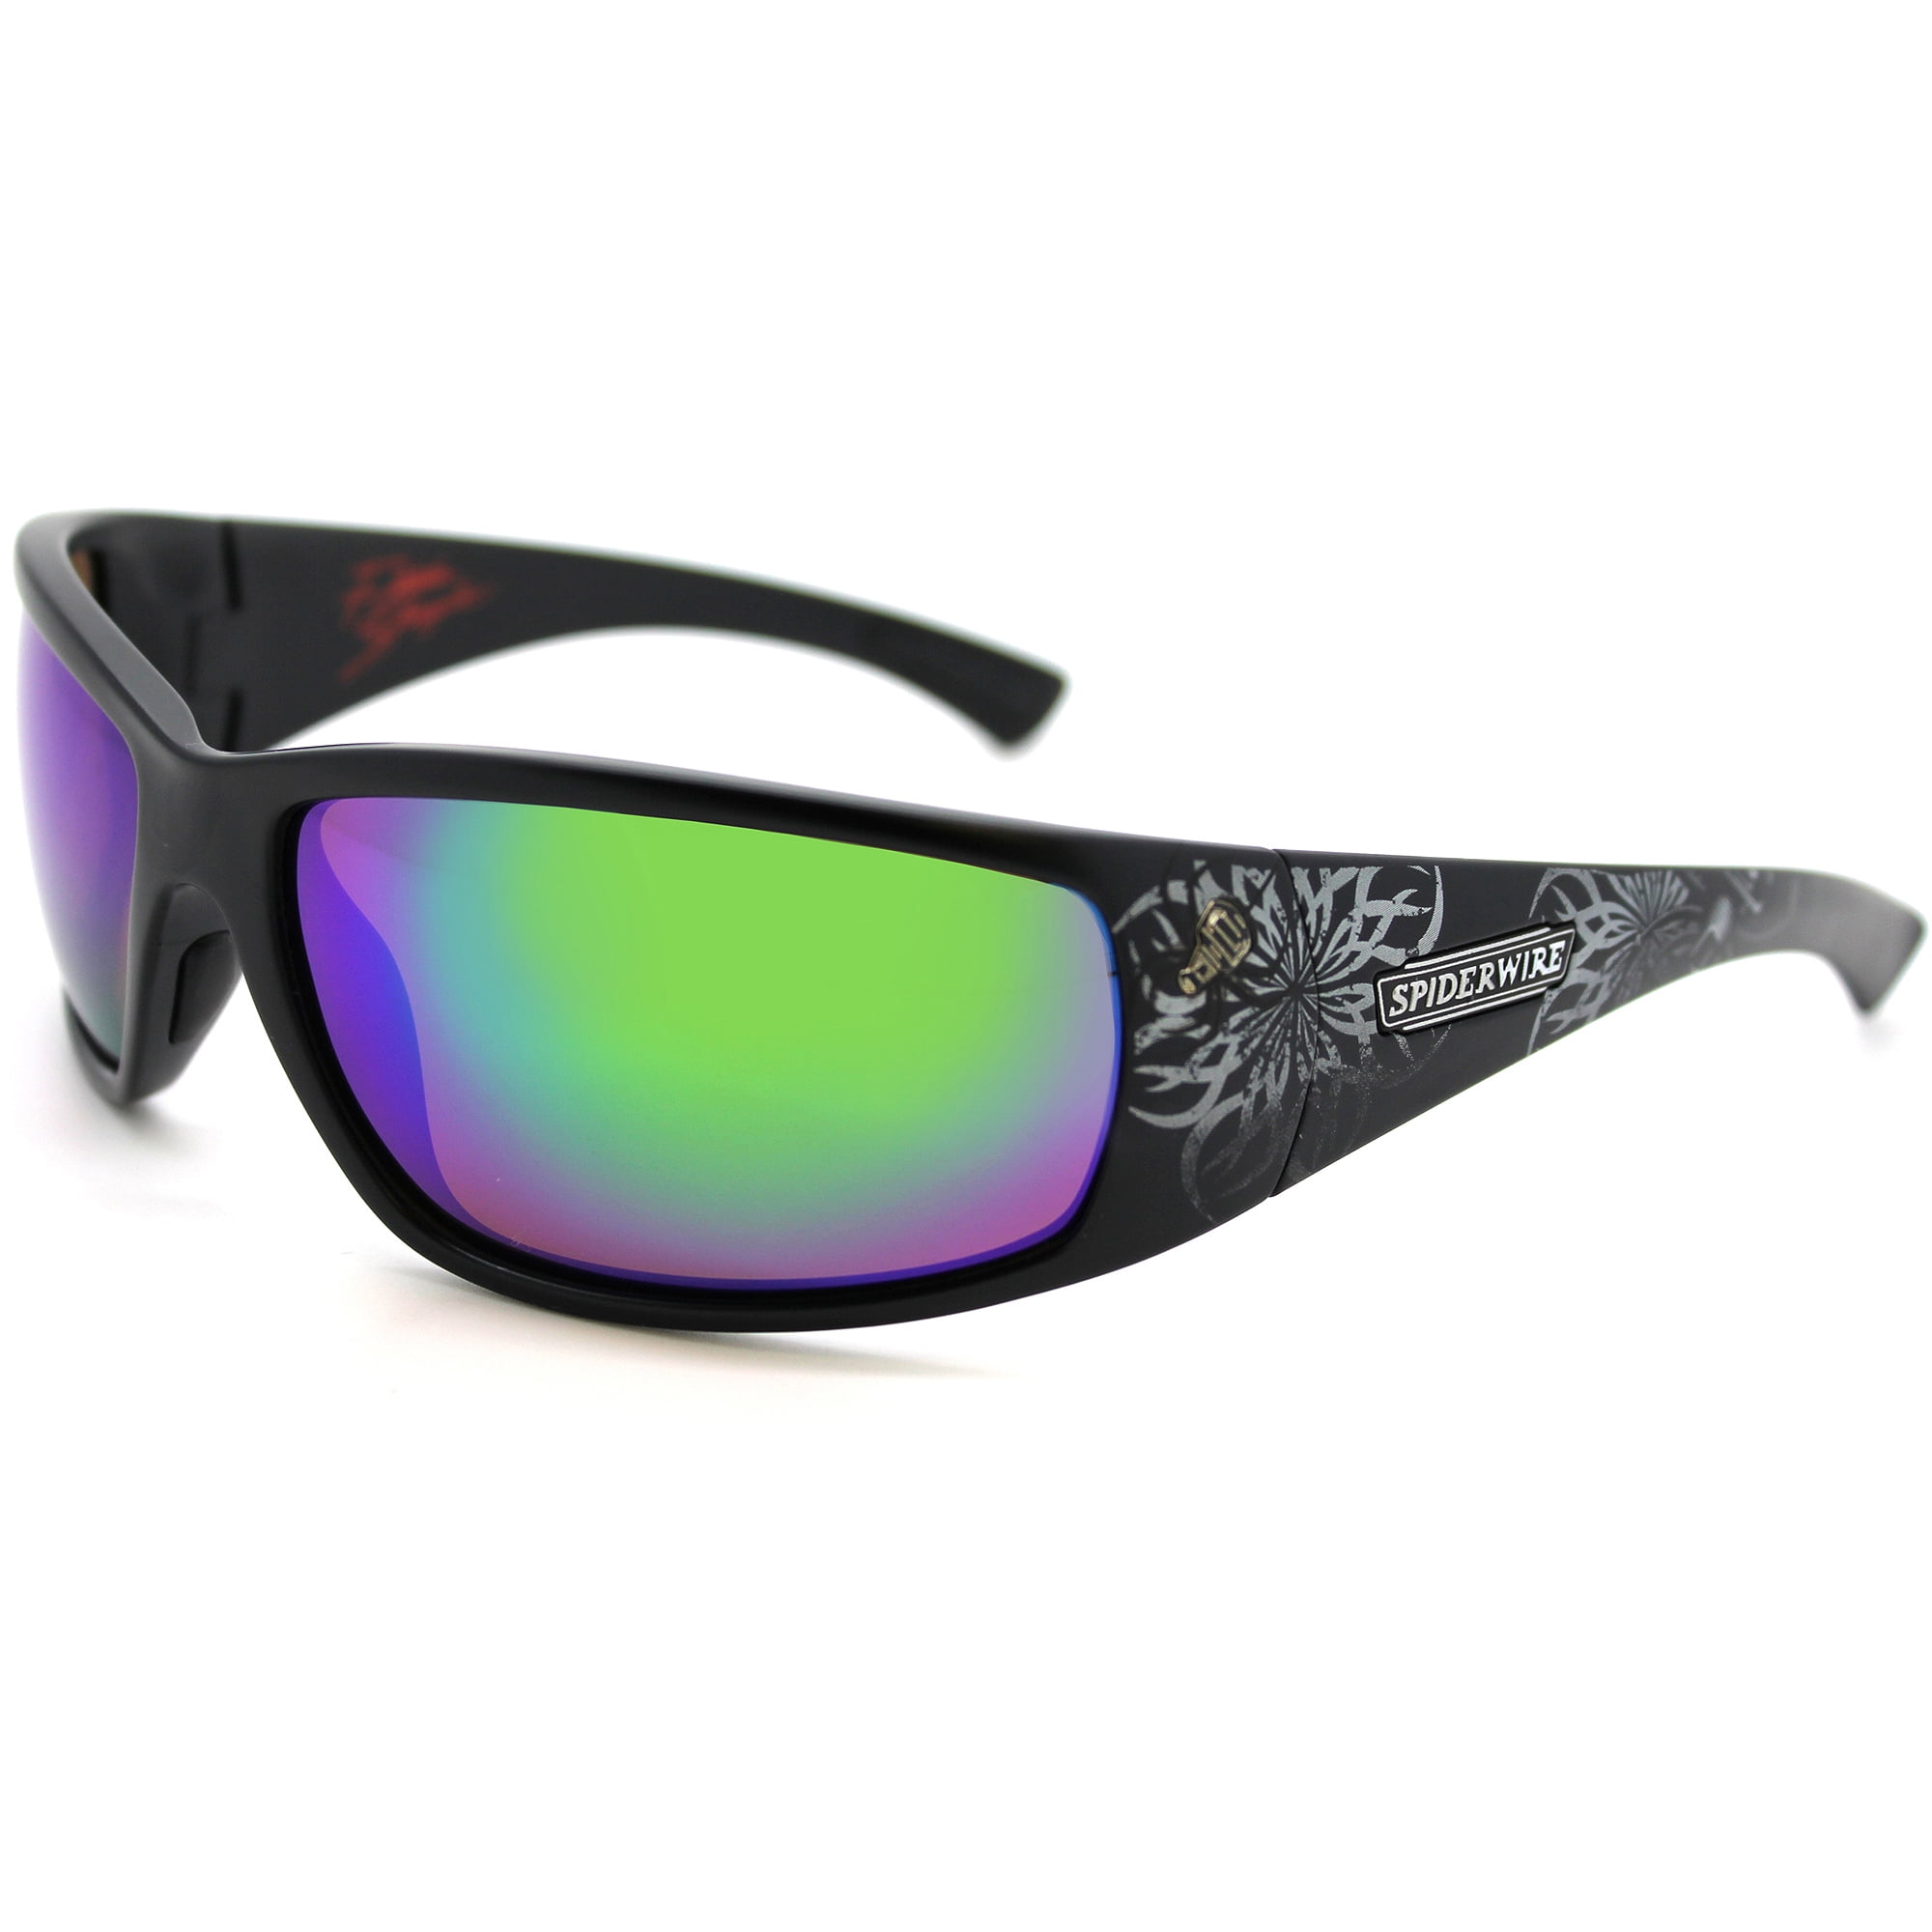 Fletcher Polarized Fishing Sunglasses, Black with Blue Lenses